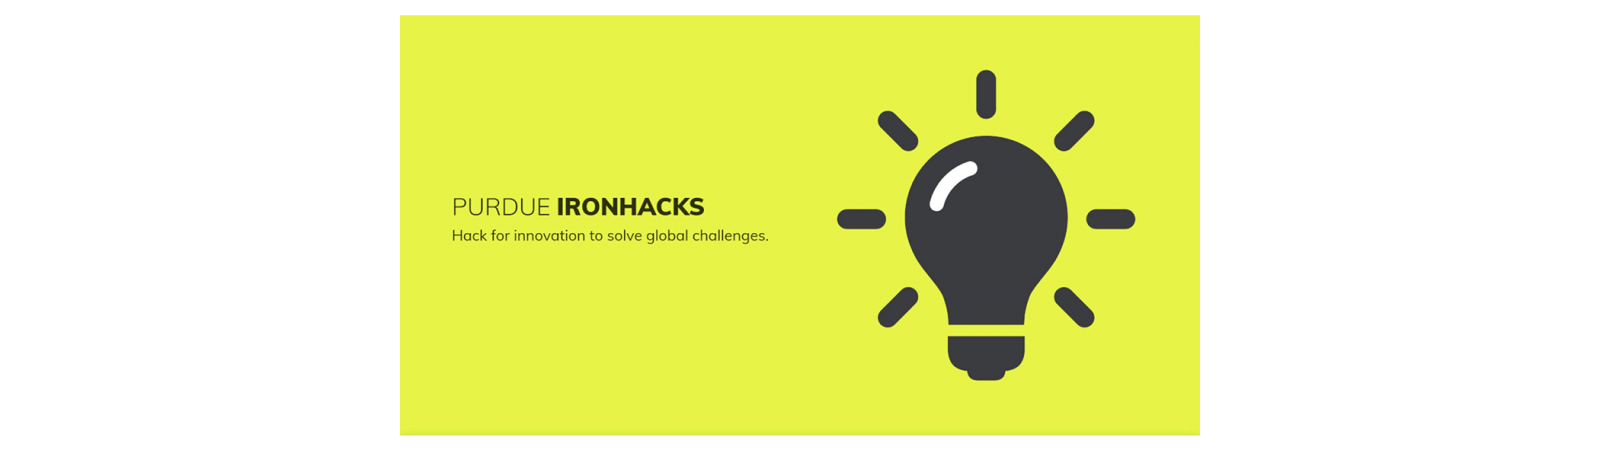 IronHacks logo